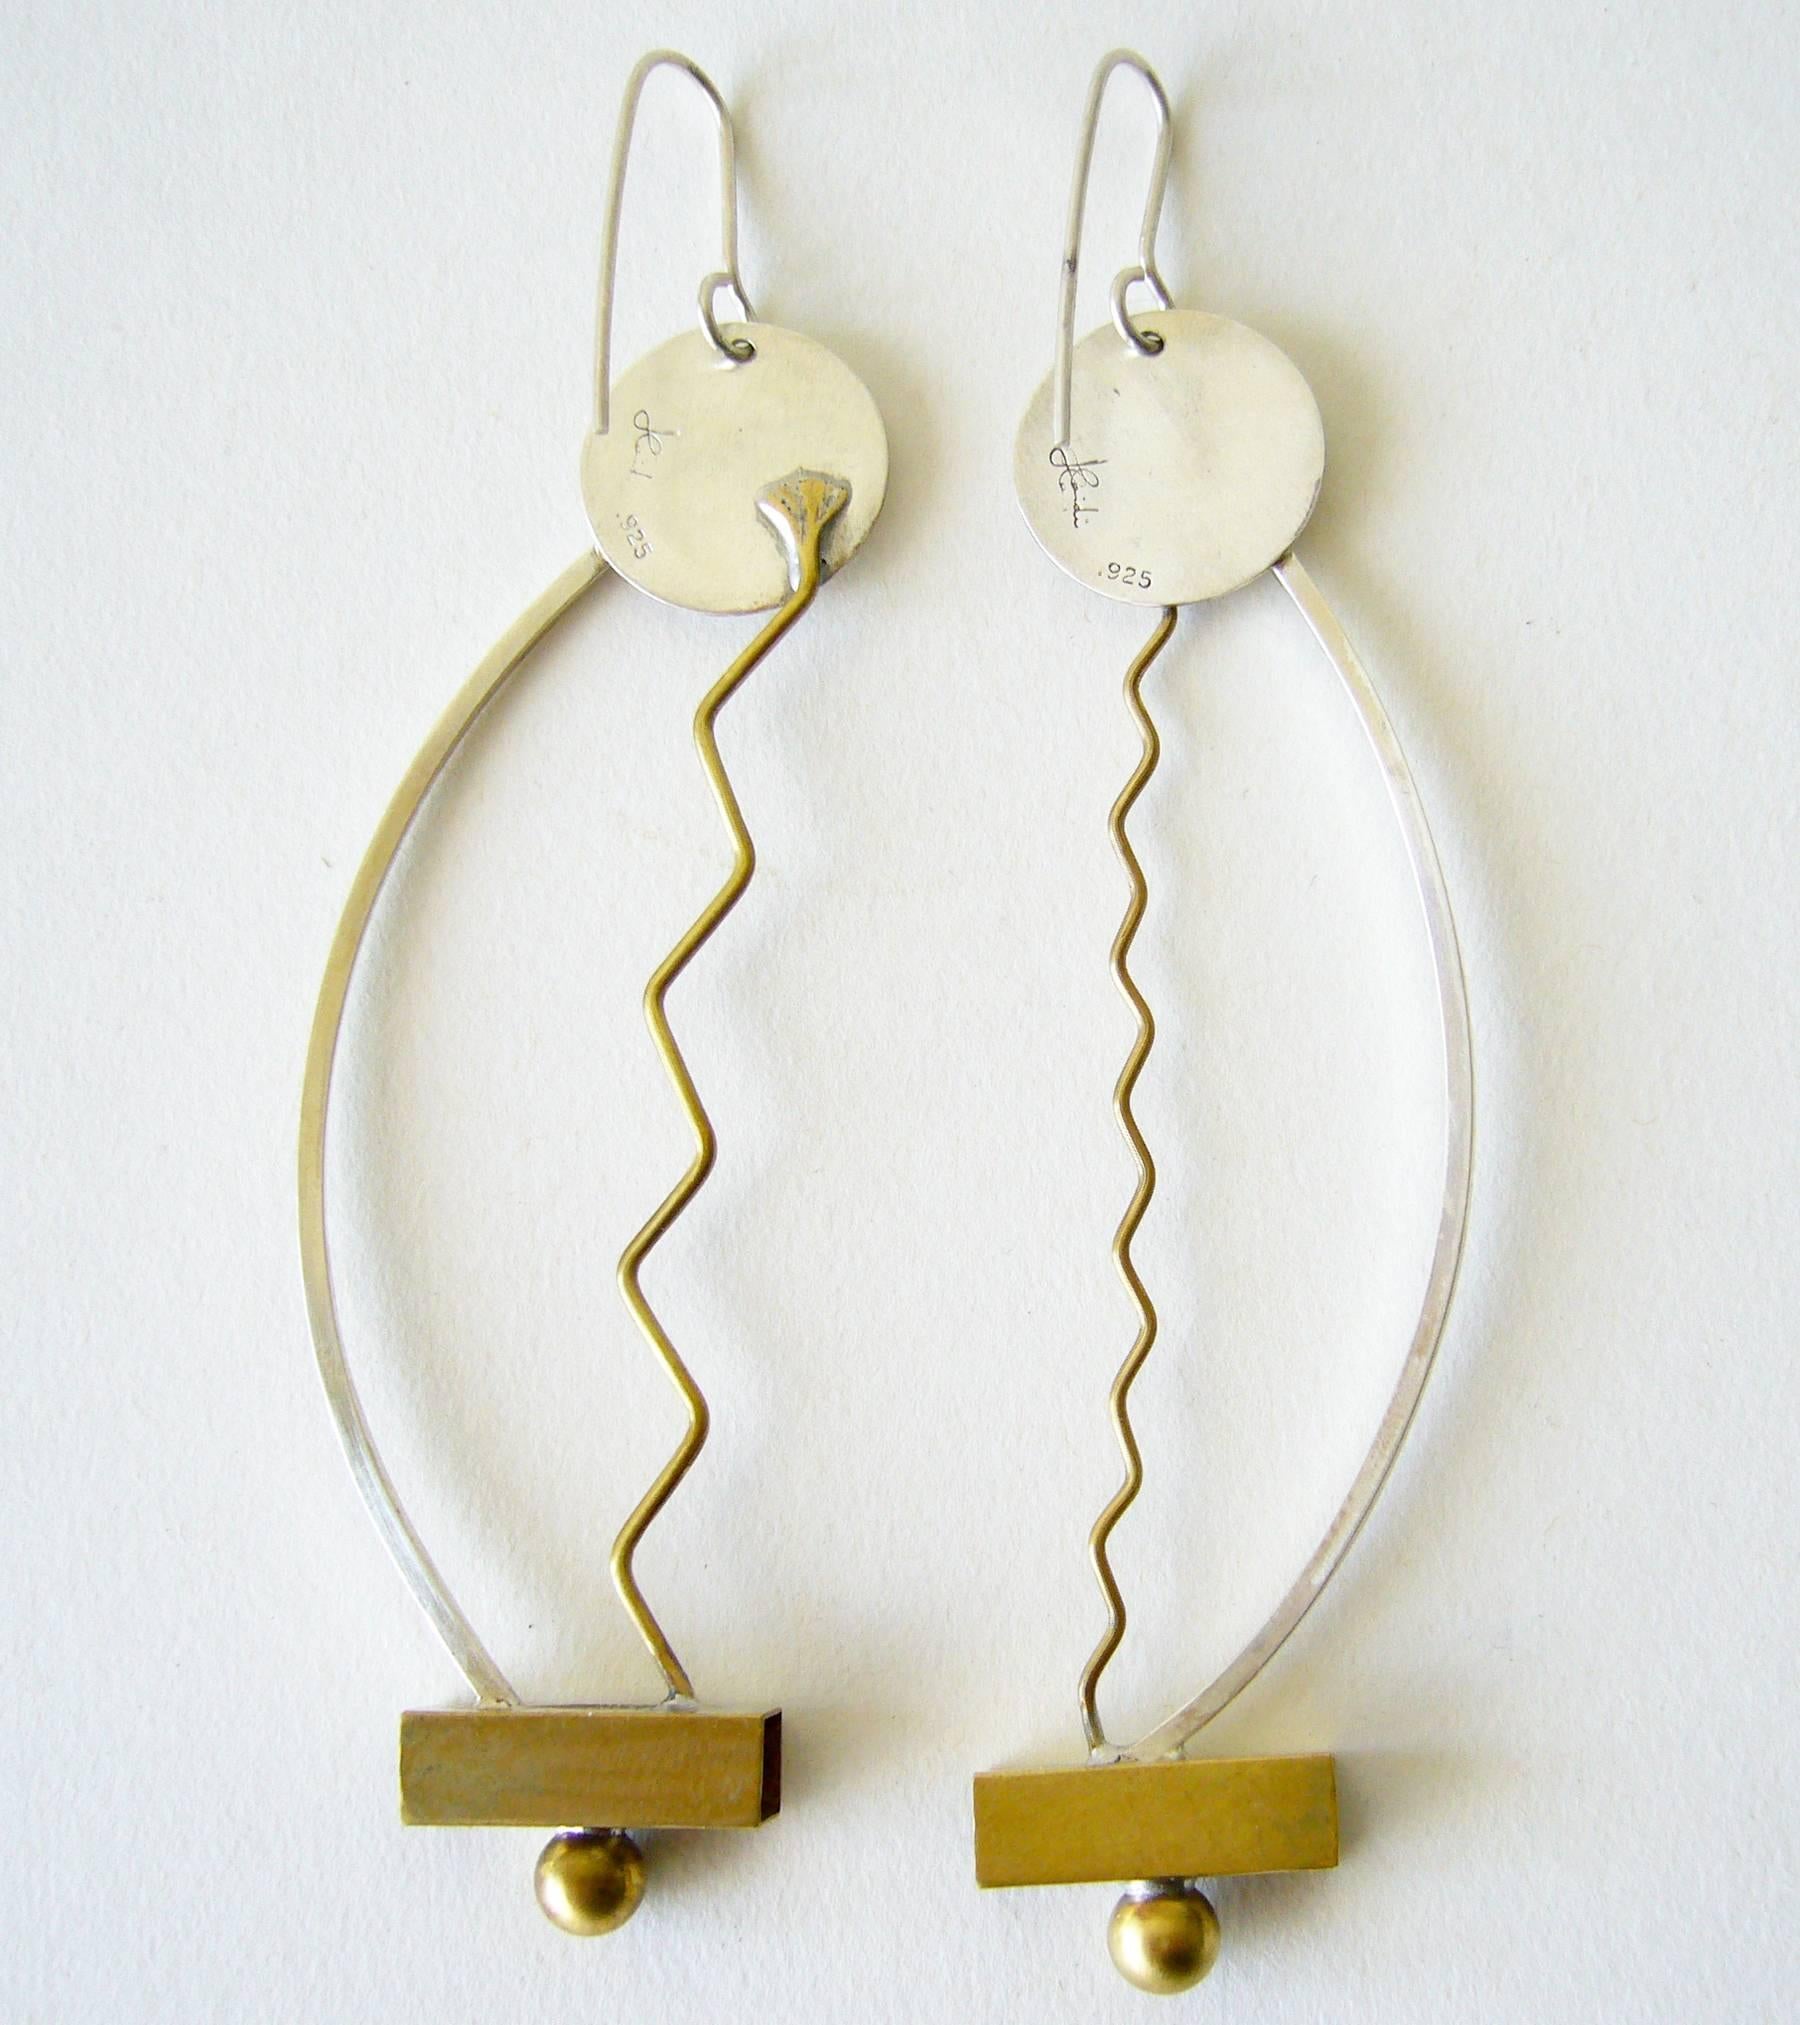 Sterling silver and brass post modernist style pierced earring created by Heidi Abrahamson of Phoenix, Arizona.  Earrings measure 4.5